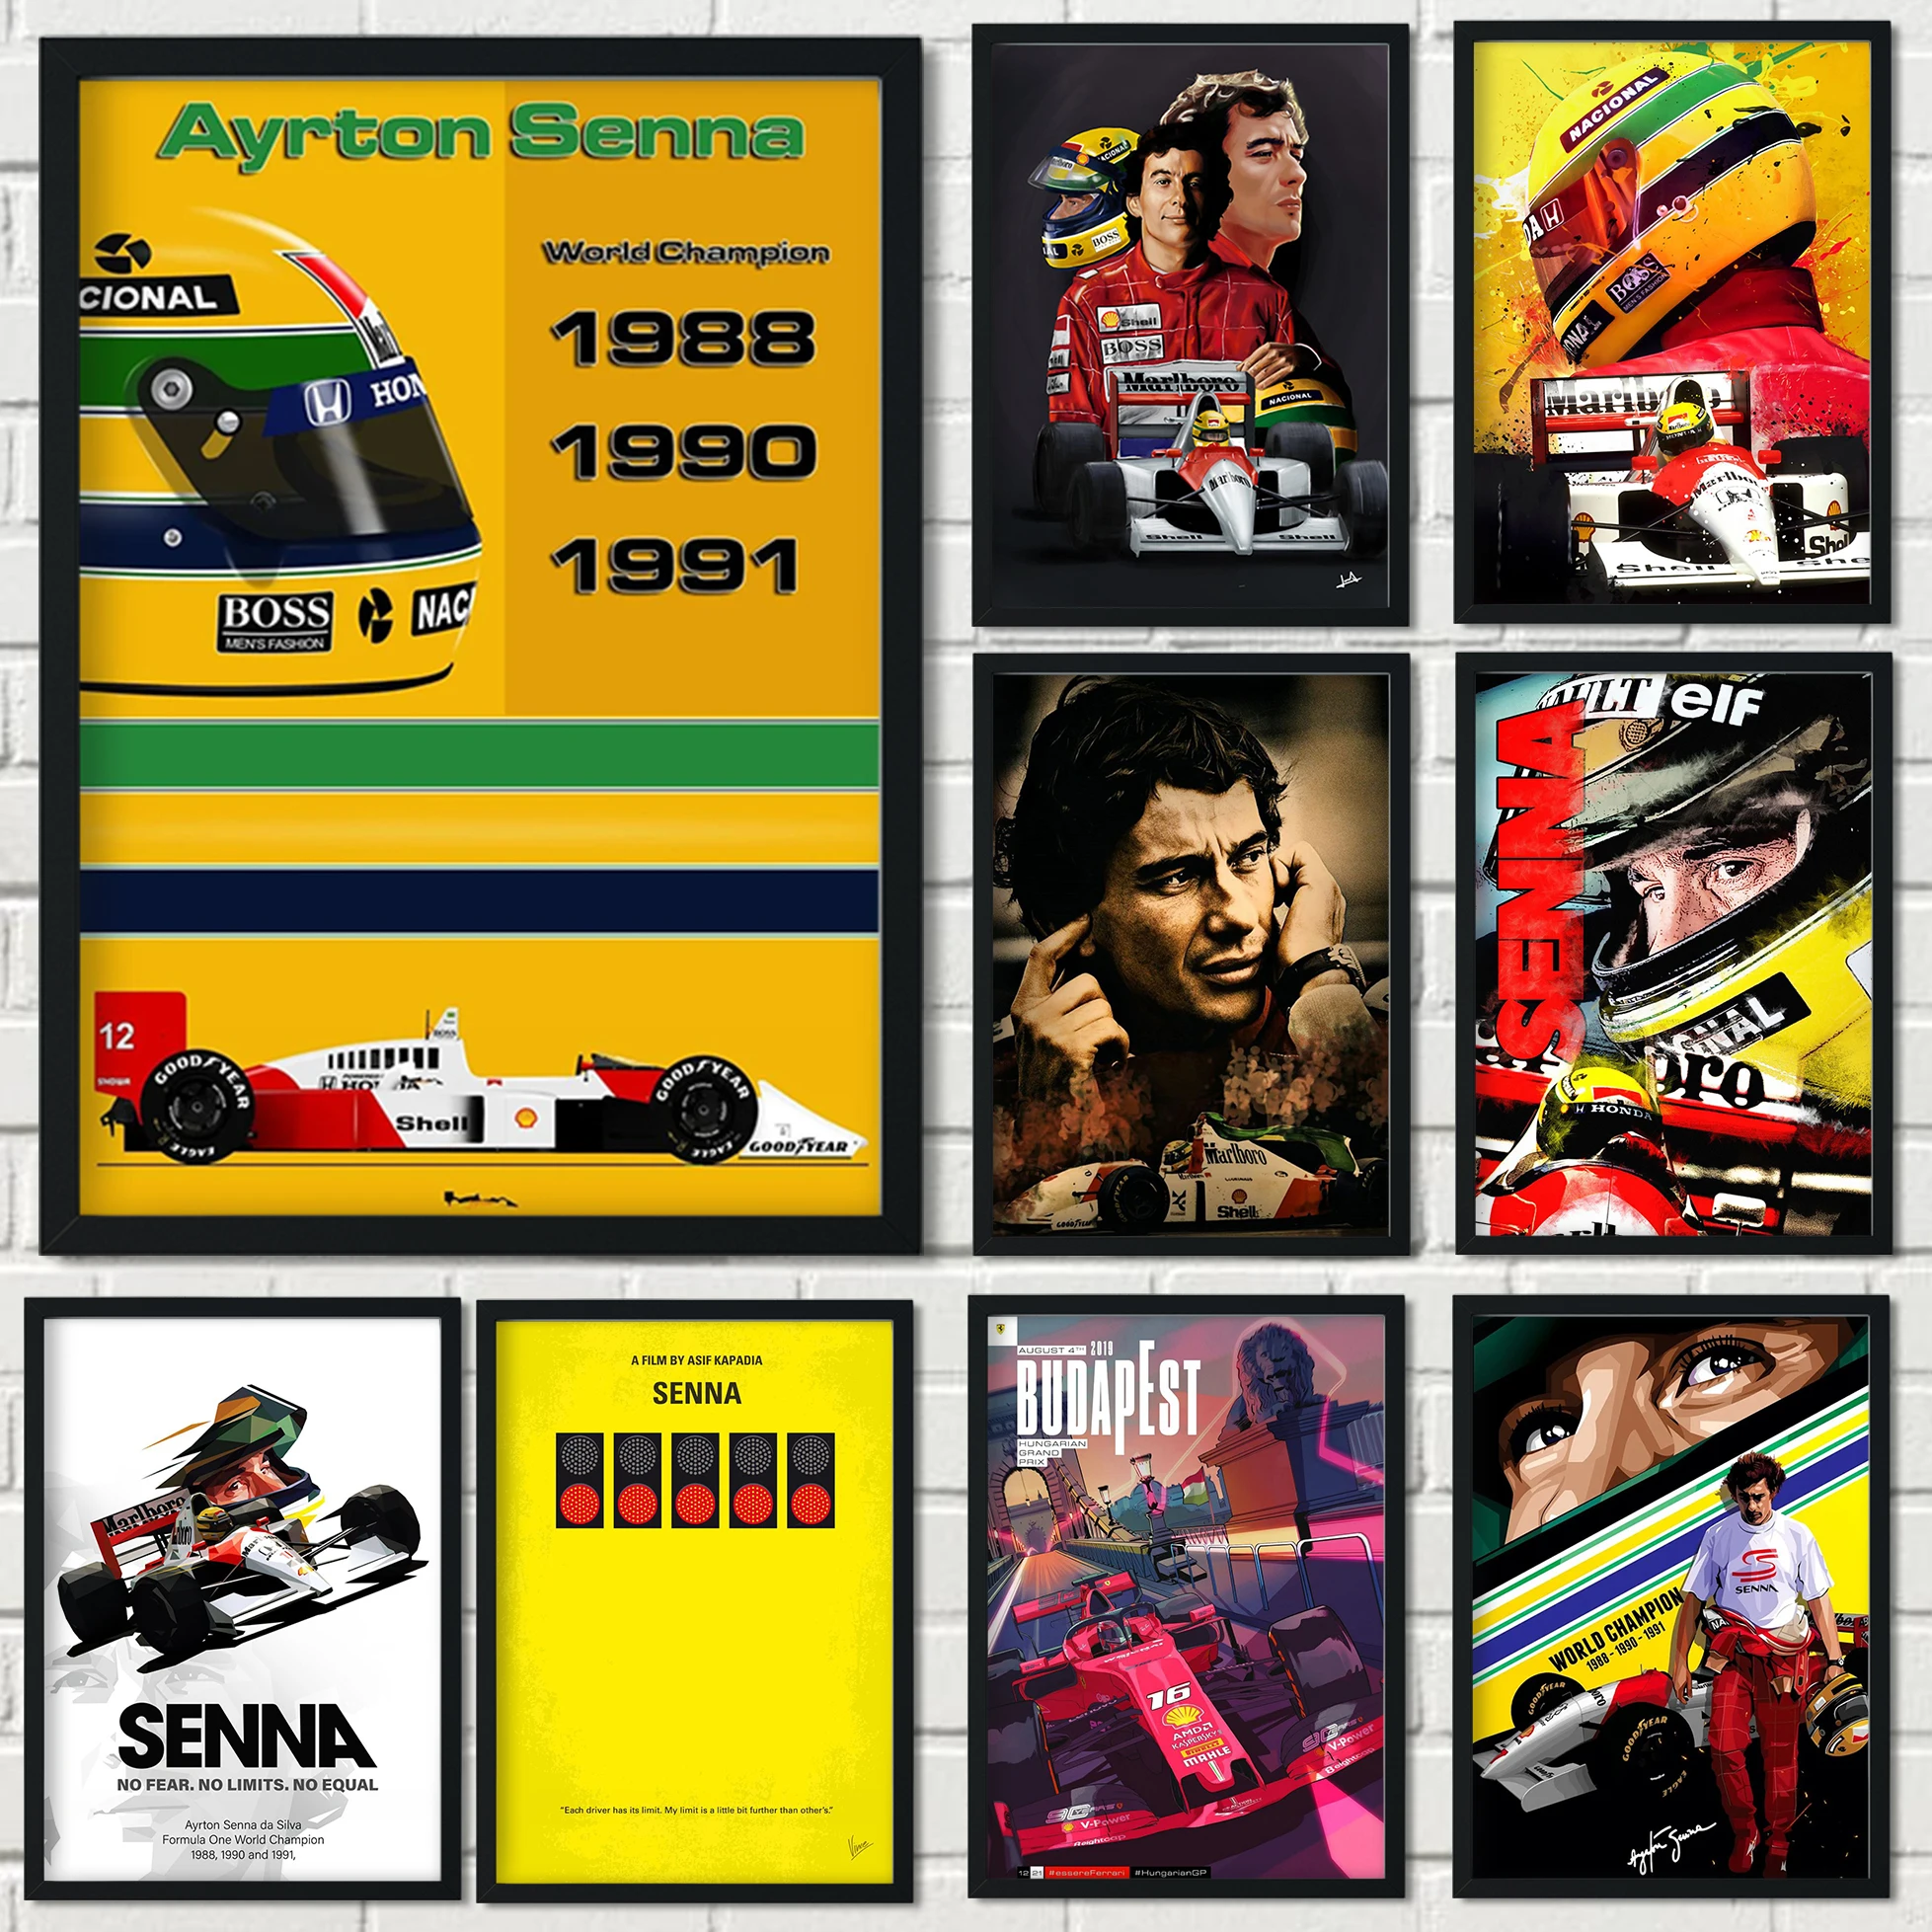 ayrton-senna-poster-f1-formula-mclaren-world-champion-poster-decorazione-art-decor-pittura-home-decor-bar-room-wall-canvas